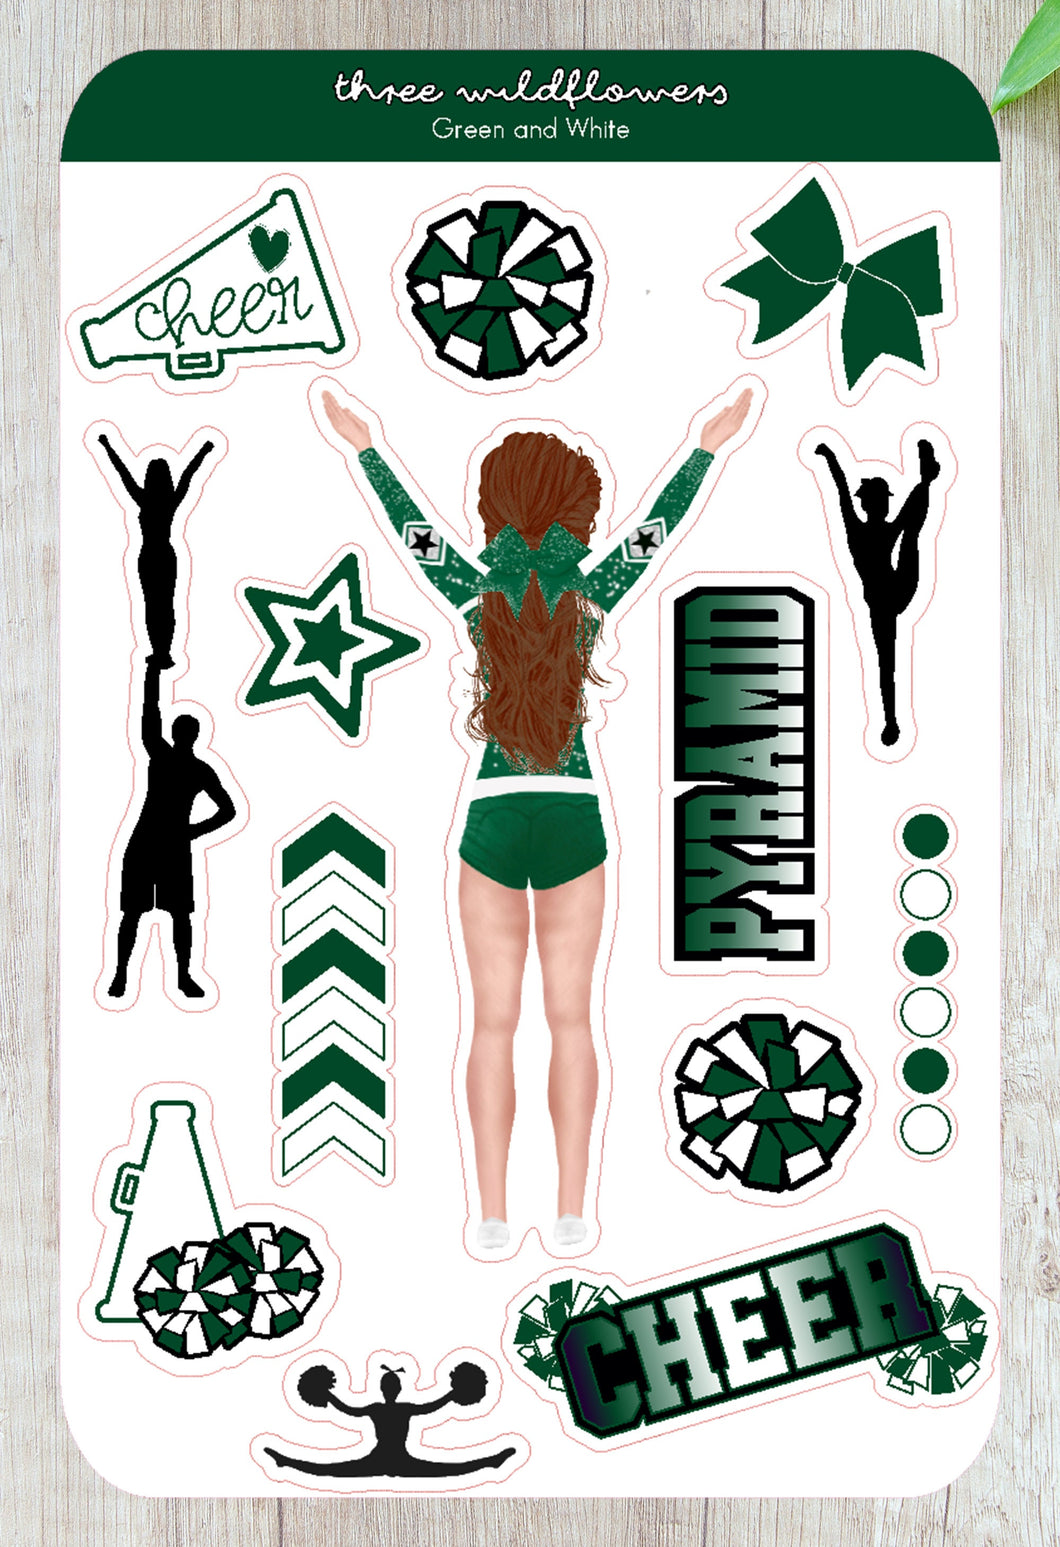 Cheerleader Sticker Sheet Green and White School Team Colors